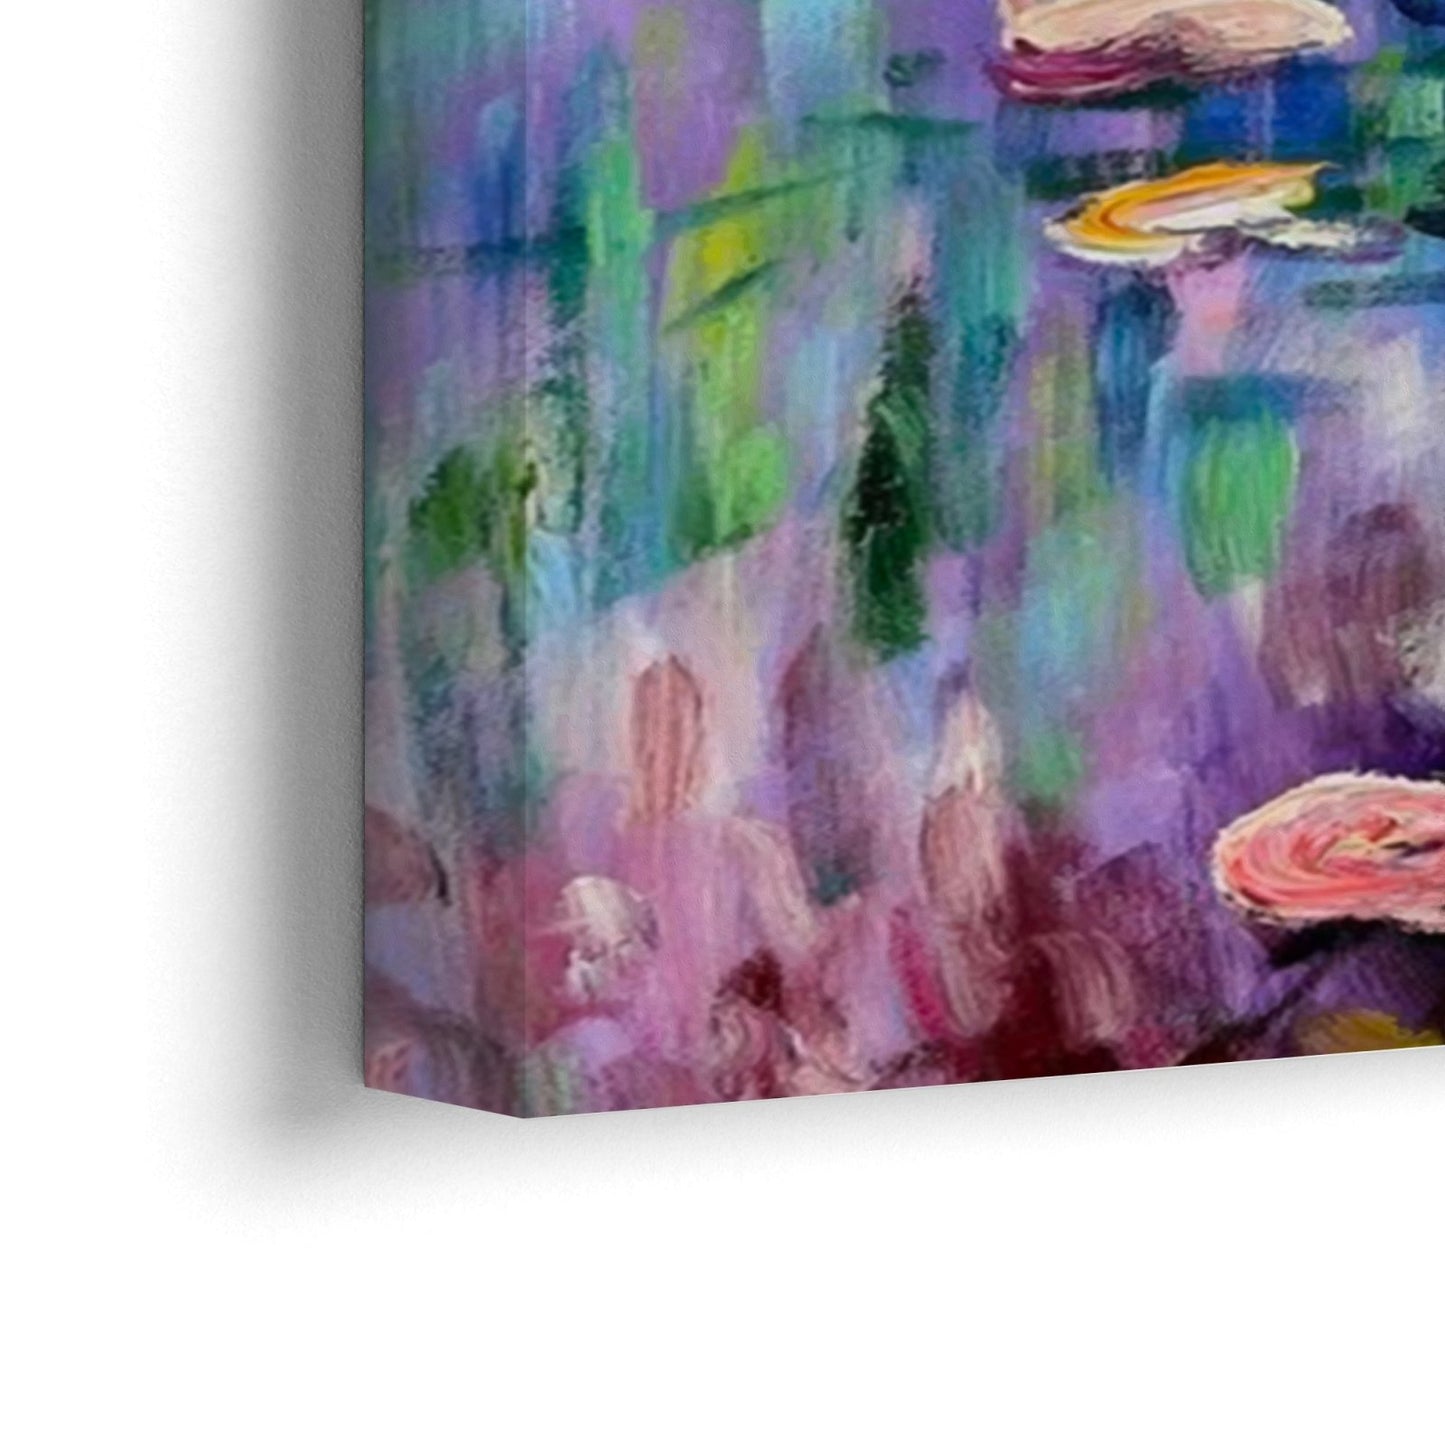 Nymphéas dans l'étang de Giverny - Claude Monet